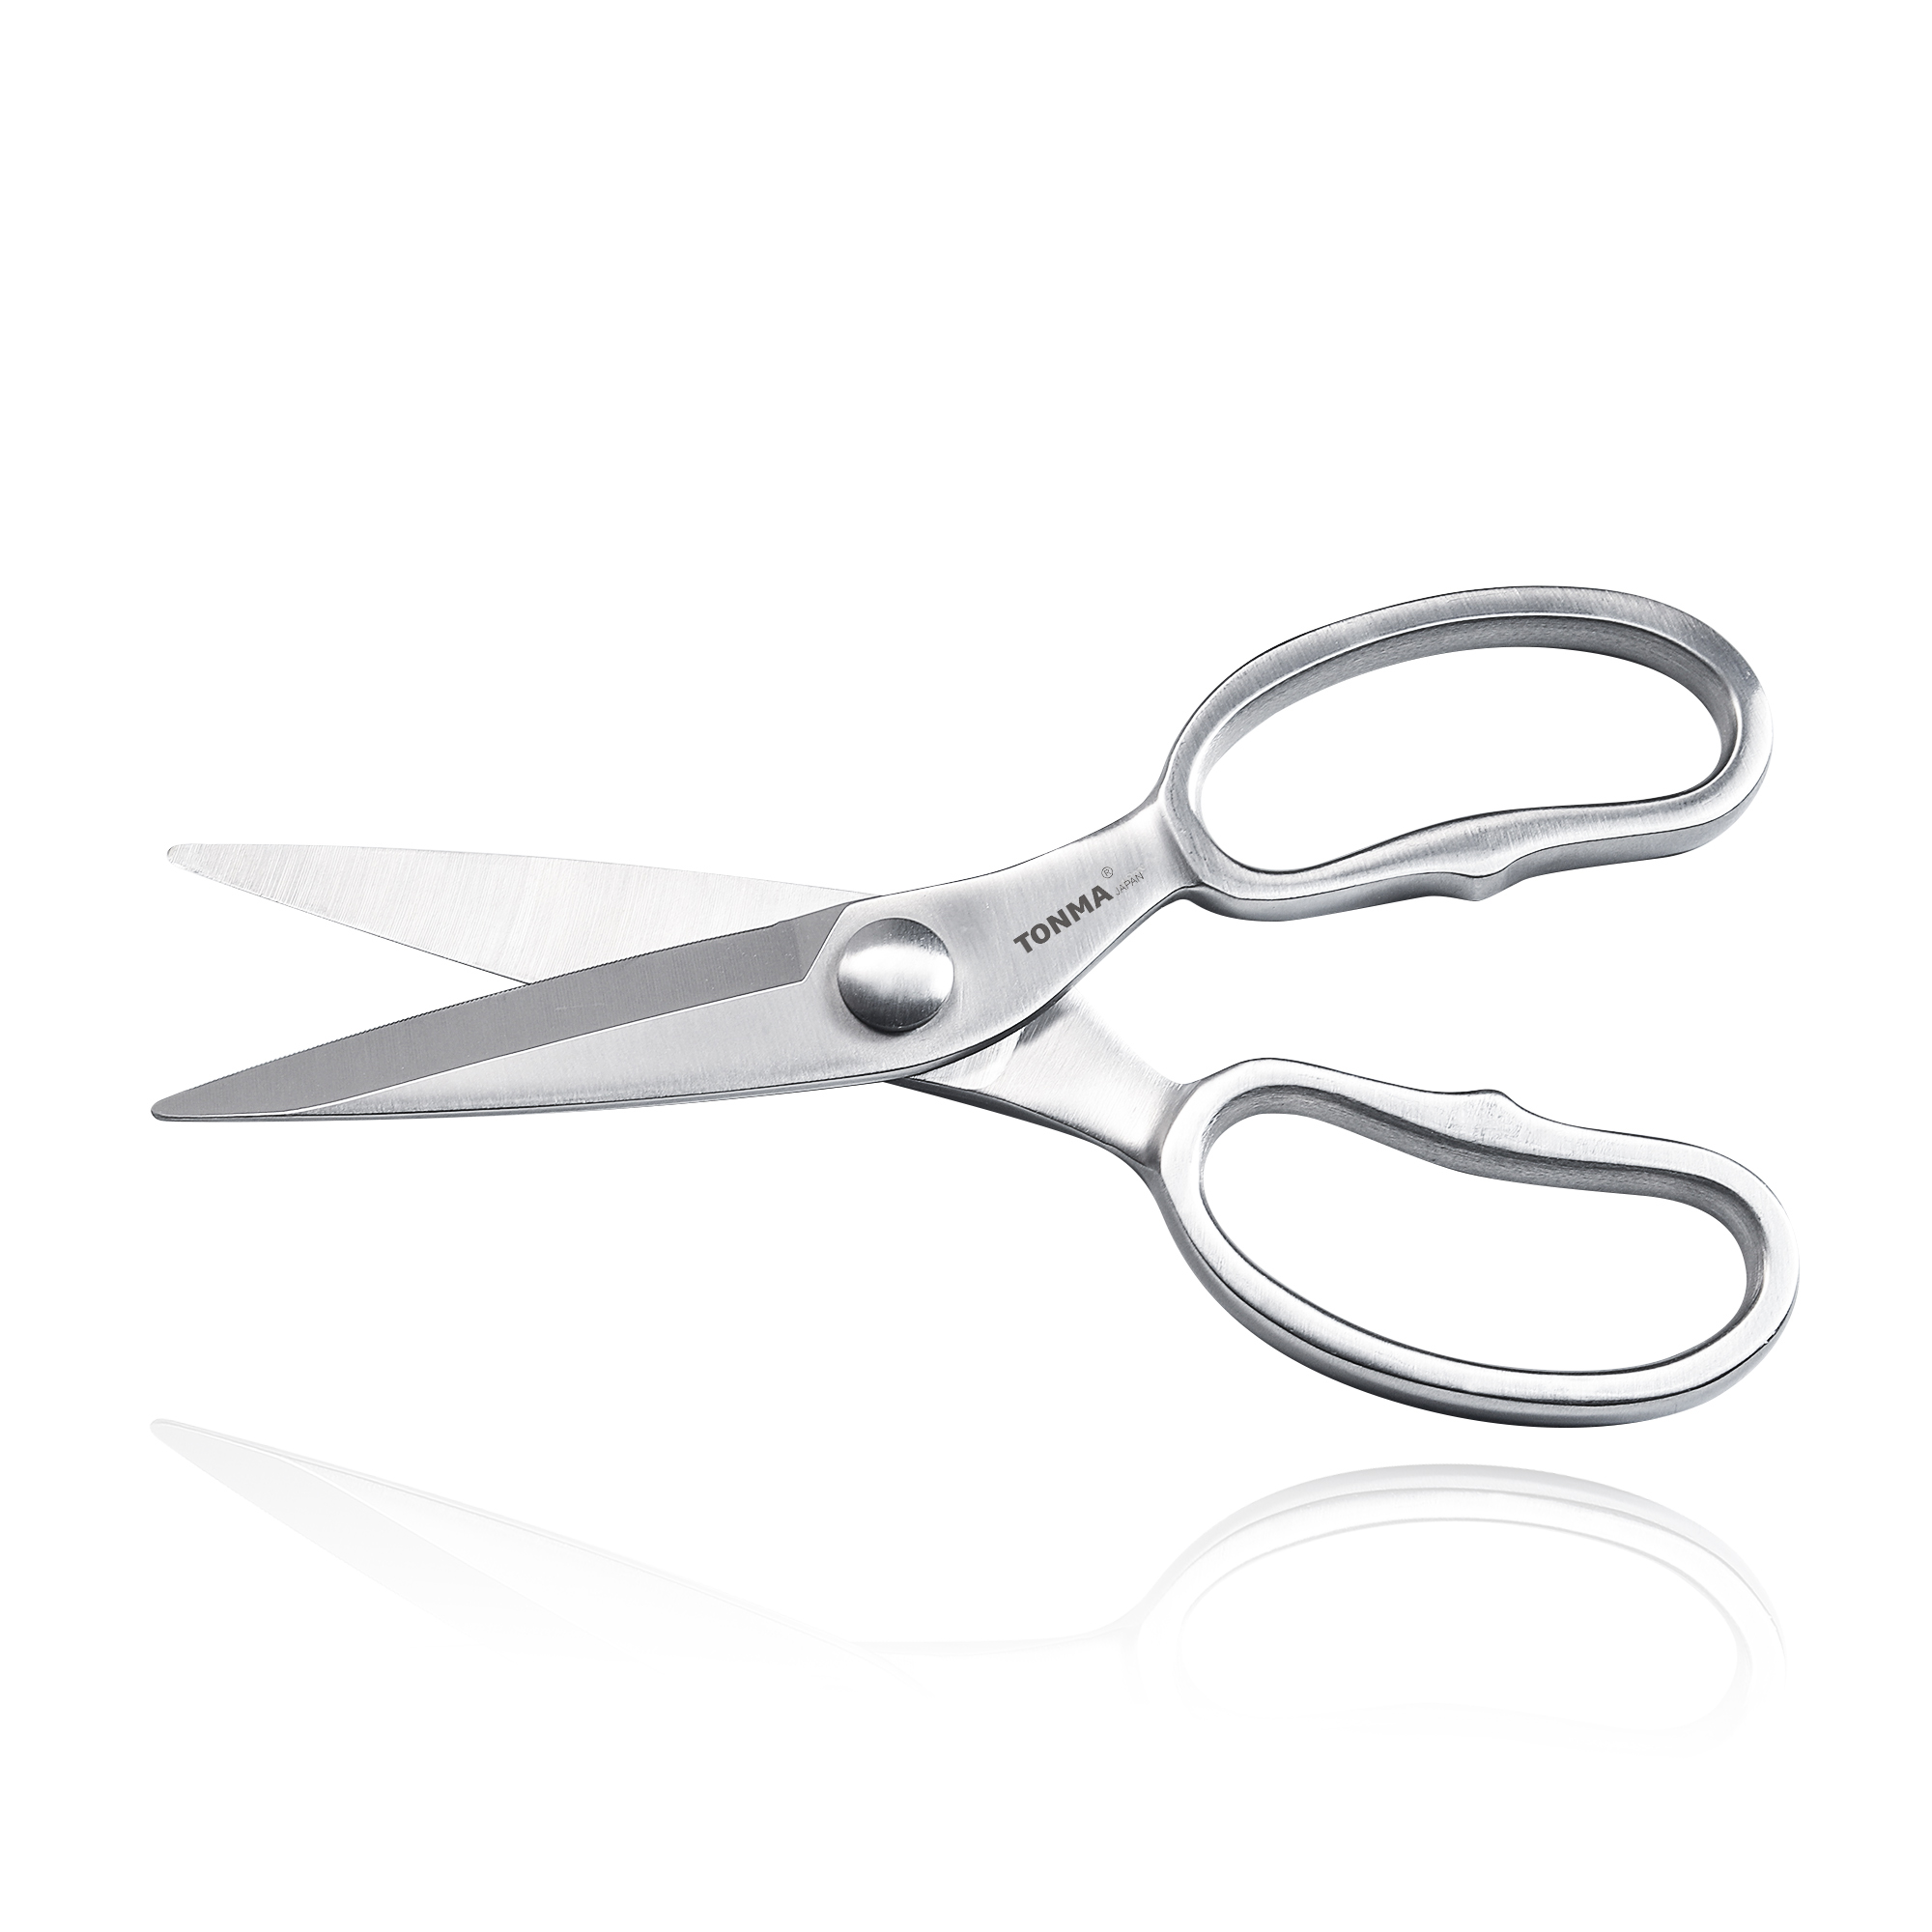 Kitchen Scissors-heavy Duty Kitchen Shears Stainless Steel,comes